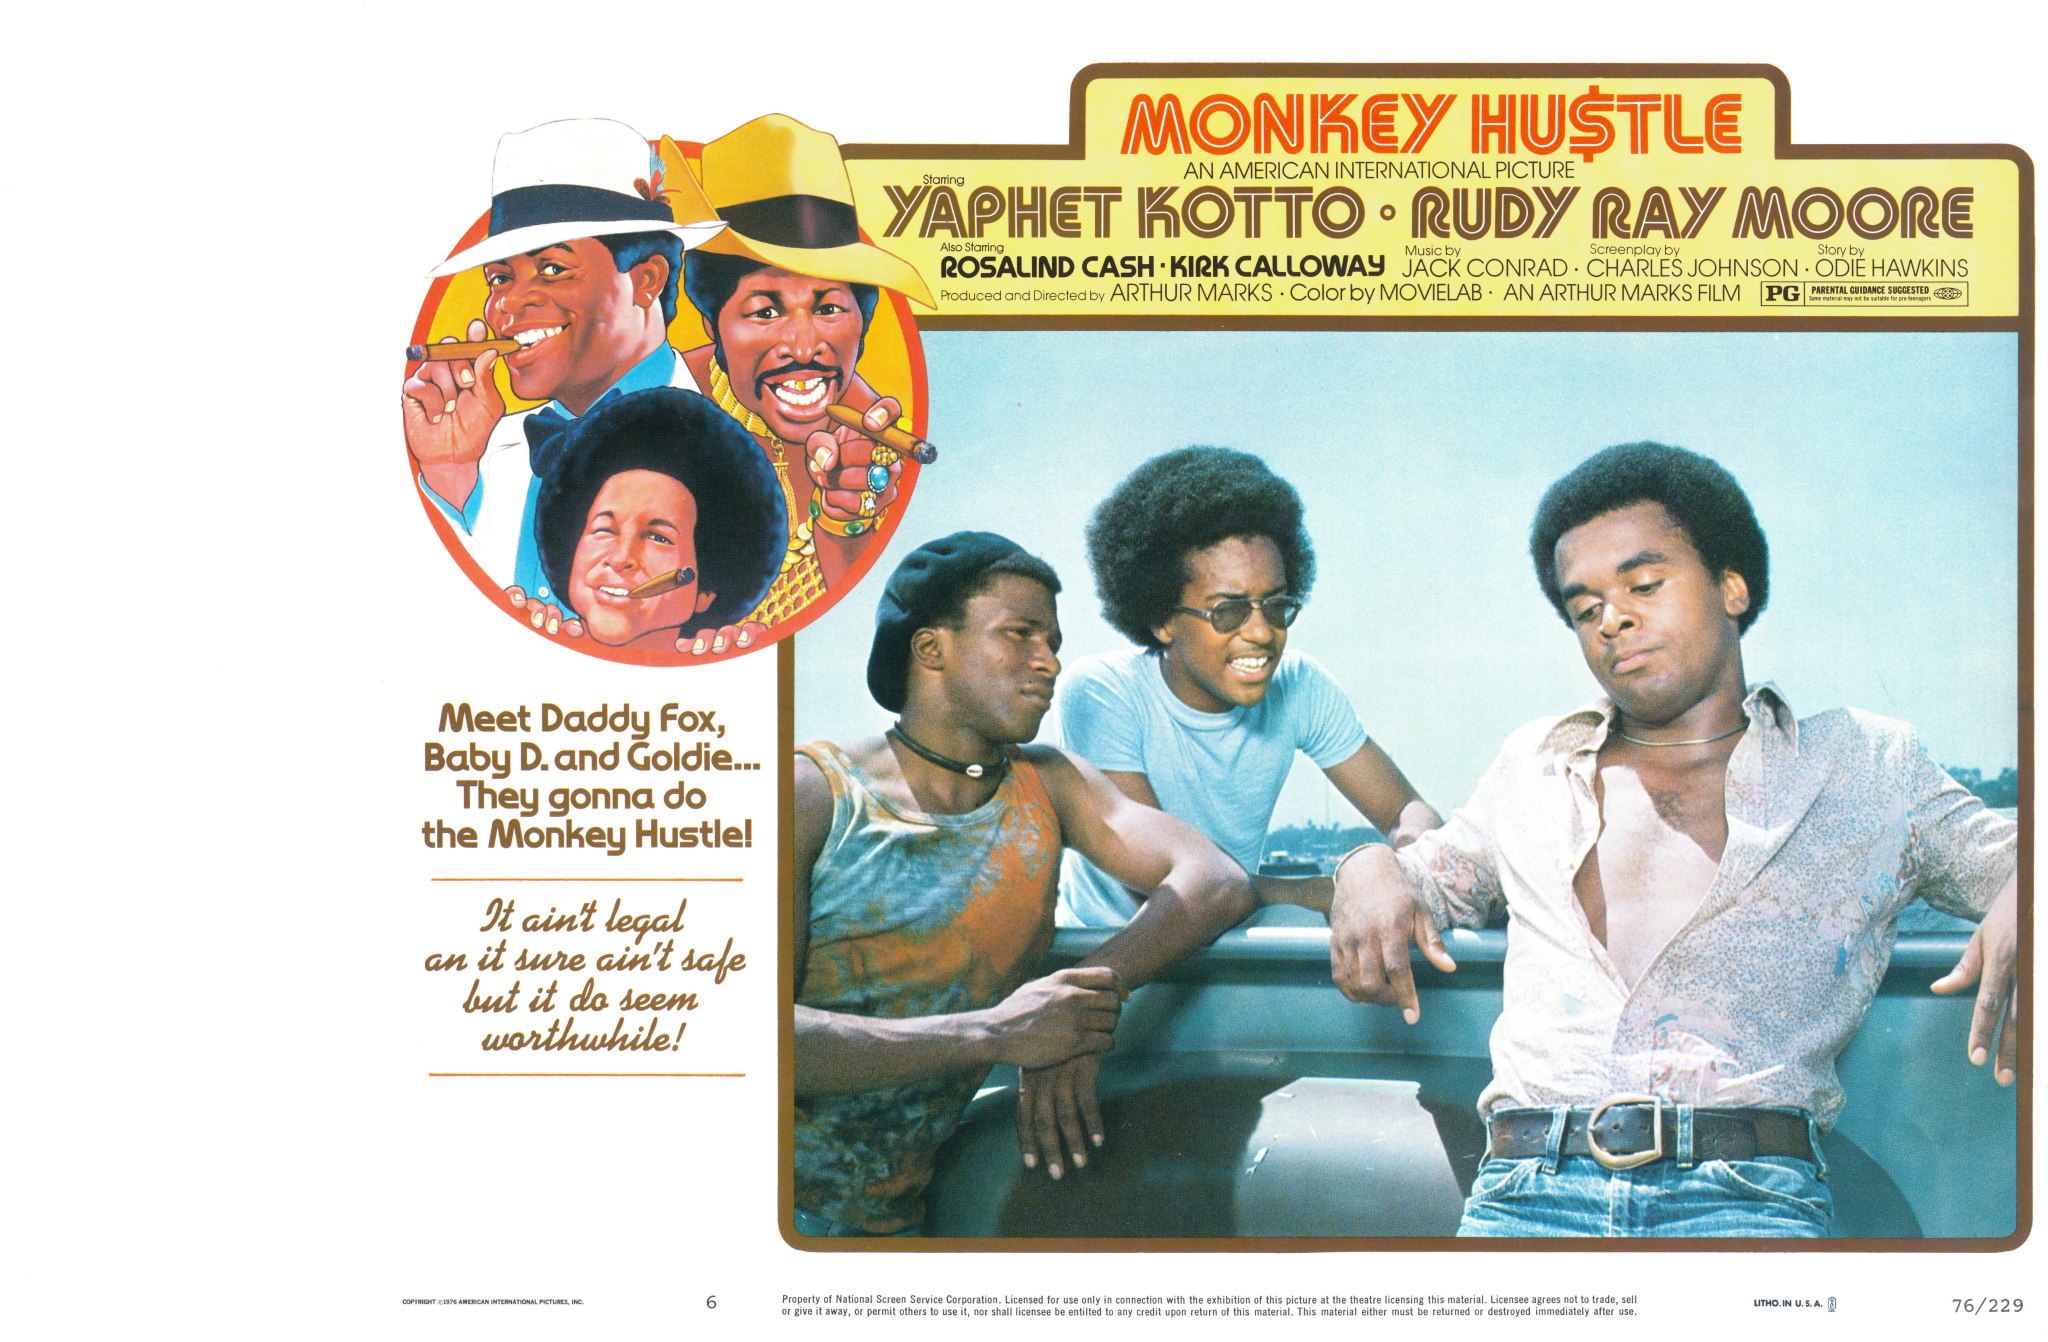 The Monkey Hu$Tle [1976]